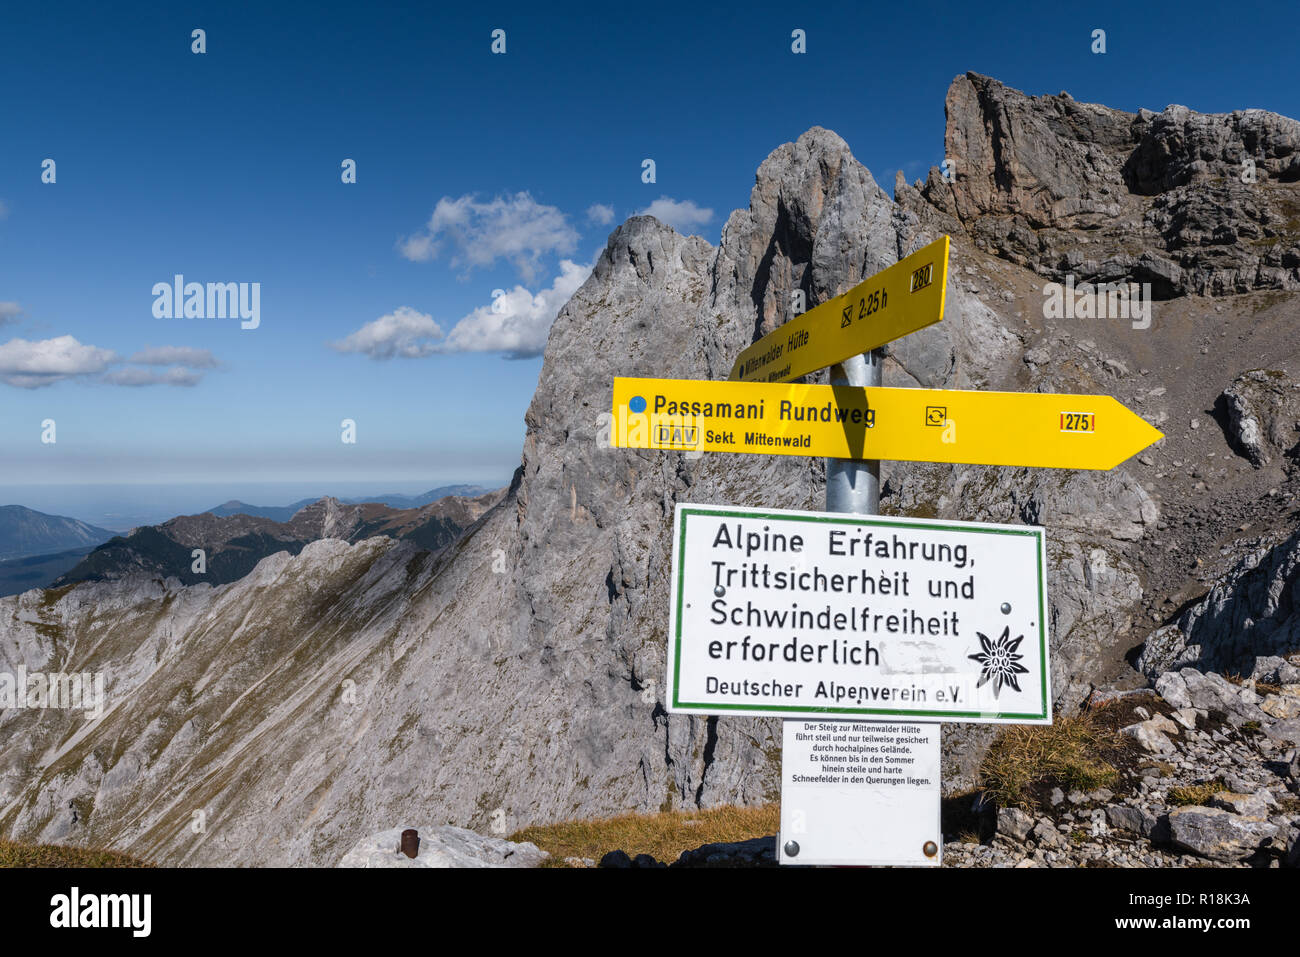 Passamani  Panoramaweg or Passamani Hiking Trail, Karwendelbahn, Mittenwald, Karwendelgebirge or Karwendel Mountains, The Alps, Bavaria, Germany Stock Photo